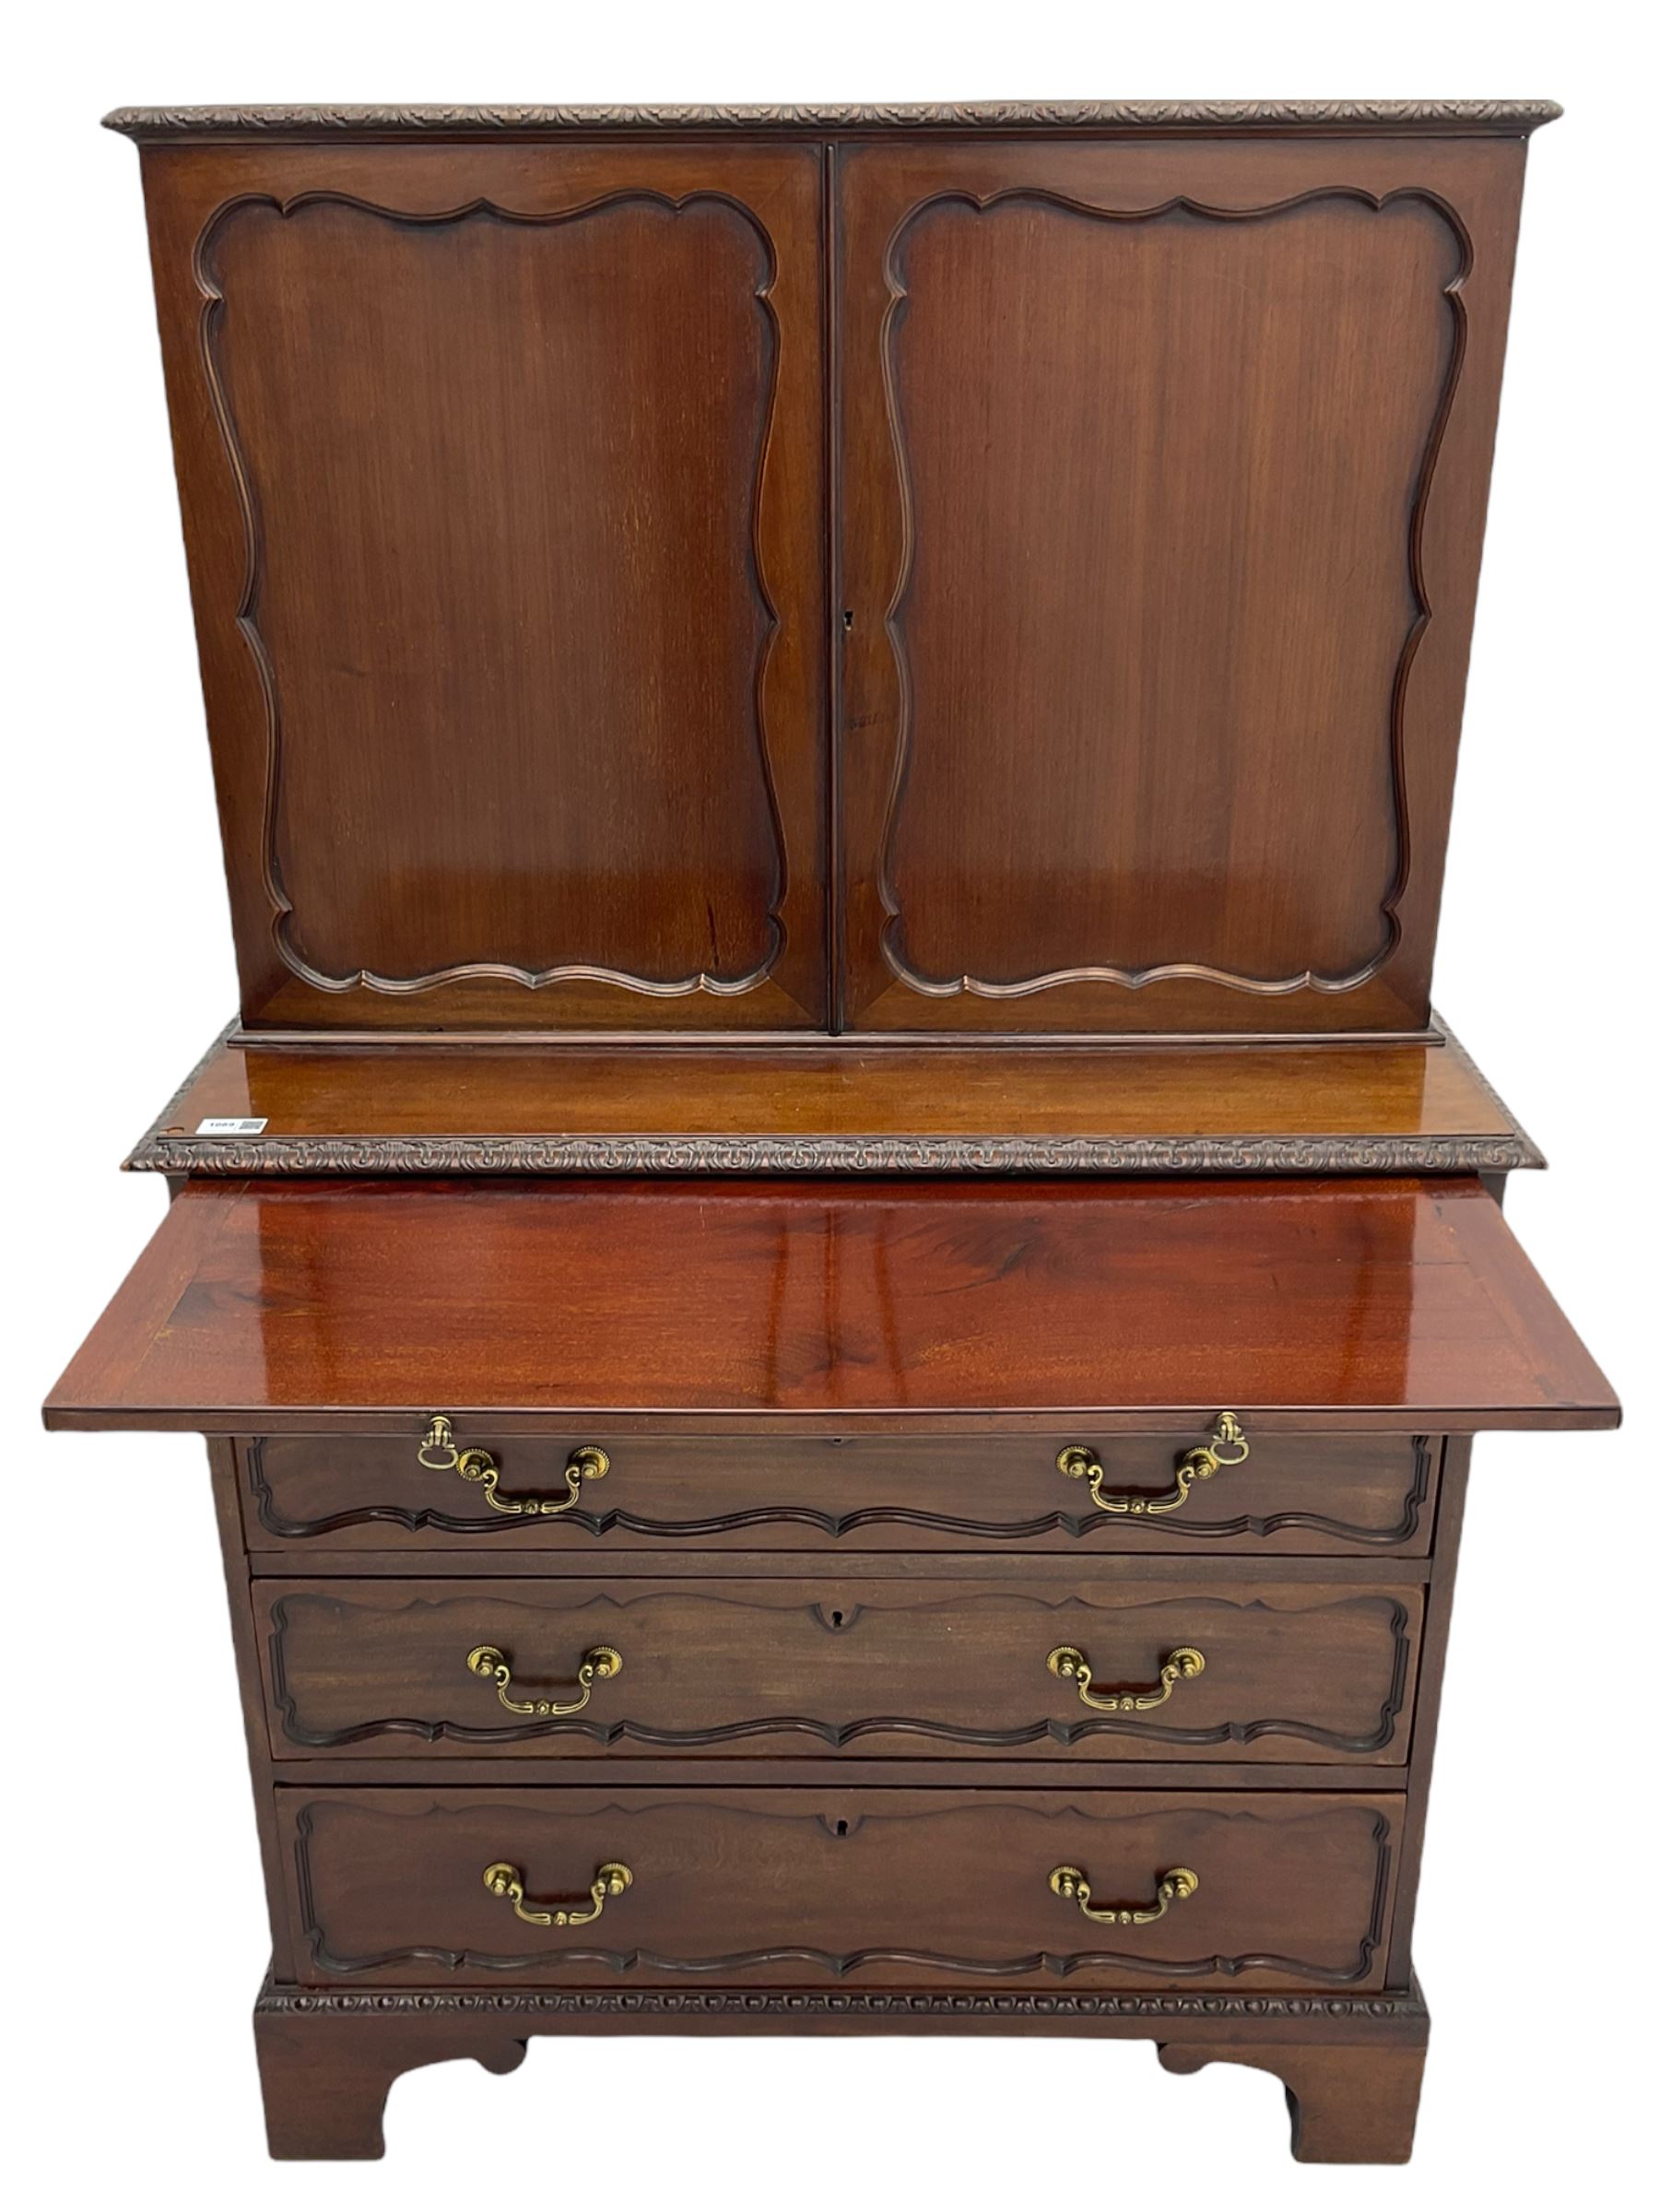 Late 19th century mahogany estate type cabinet - Image 8 of 14